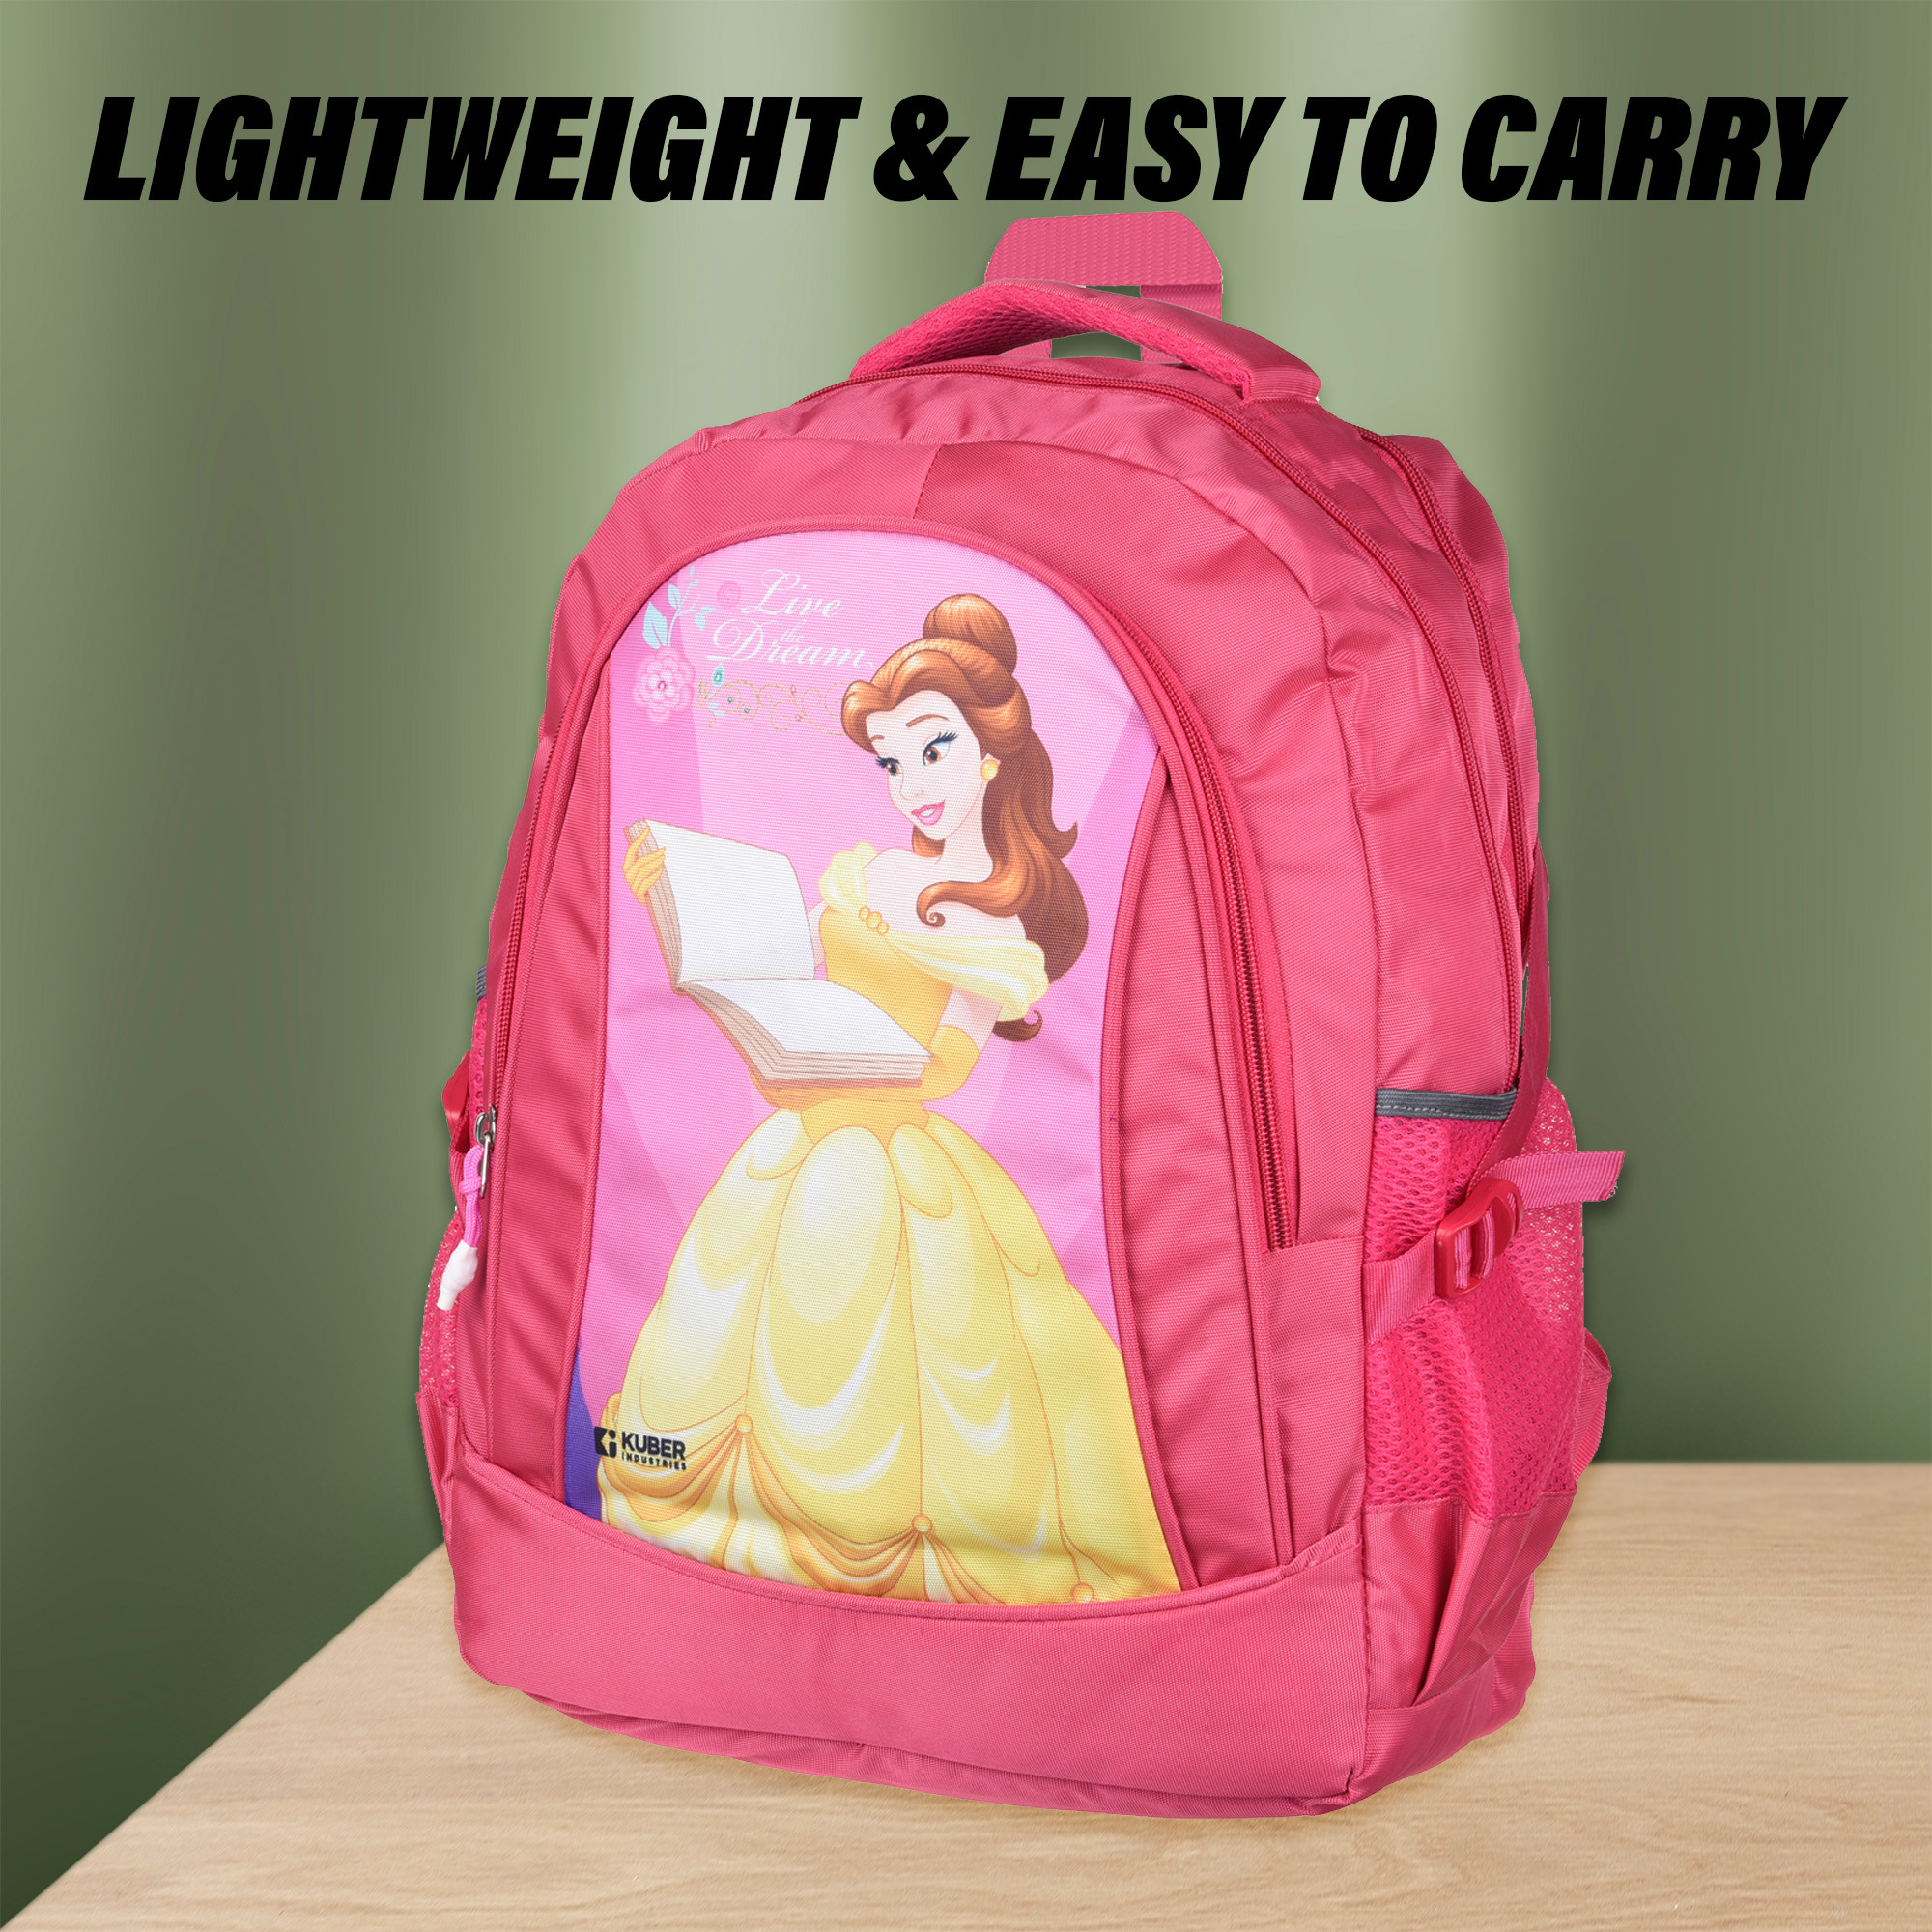 Kuber Industries Disney Princess Love The Dream School Bags | Kids School Bags | Student Bookbag | Travel Backpack | School Bag for Girls & Boys | School Bag with 3 Compartments | Pink